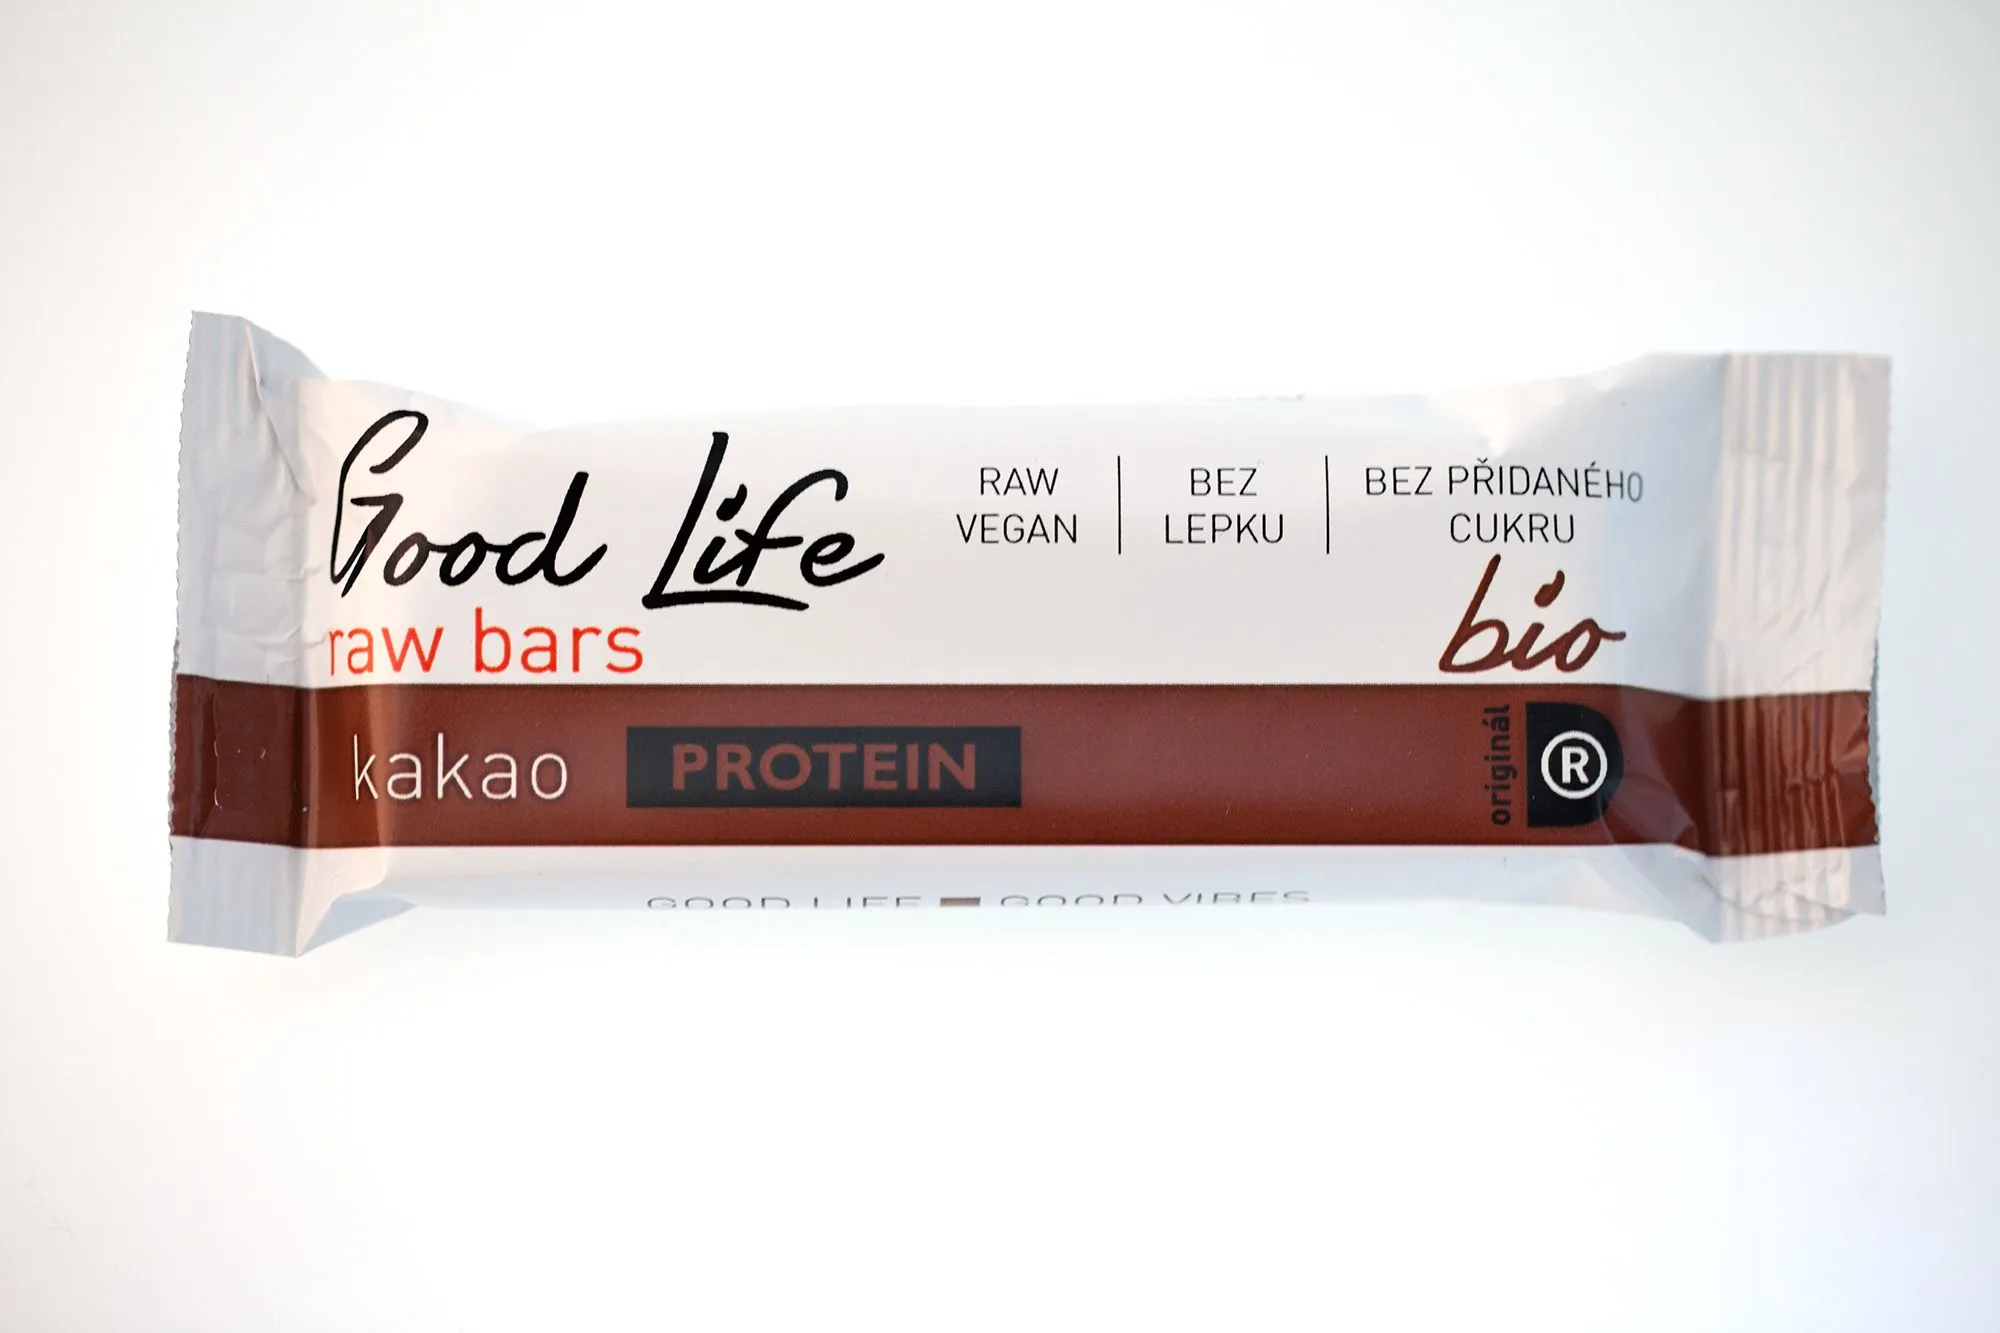 Good Life Raw Bar kakao PROTEIN 45g